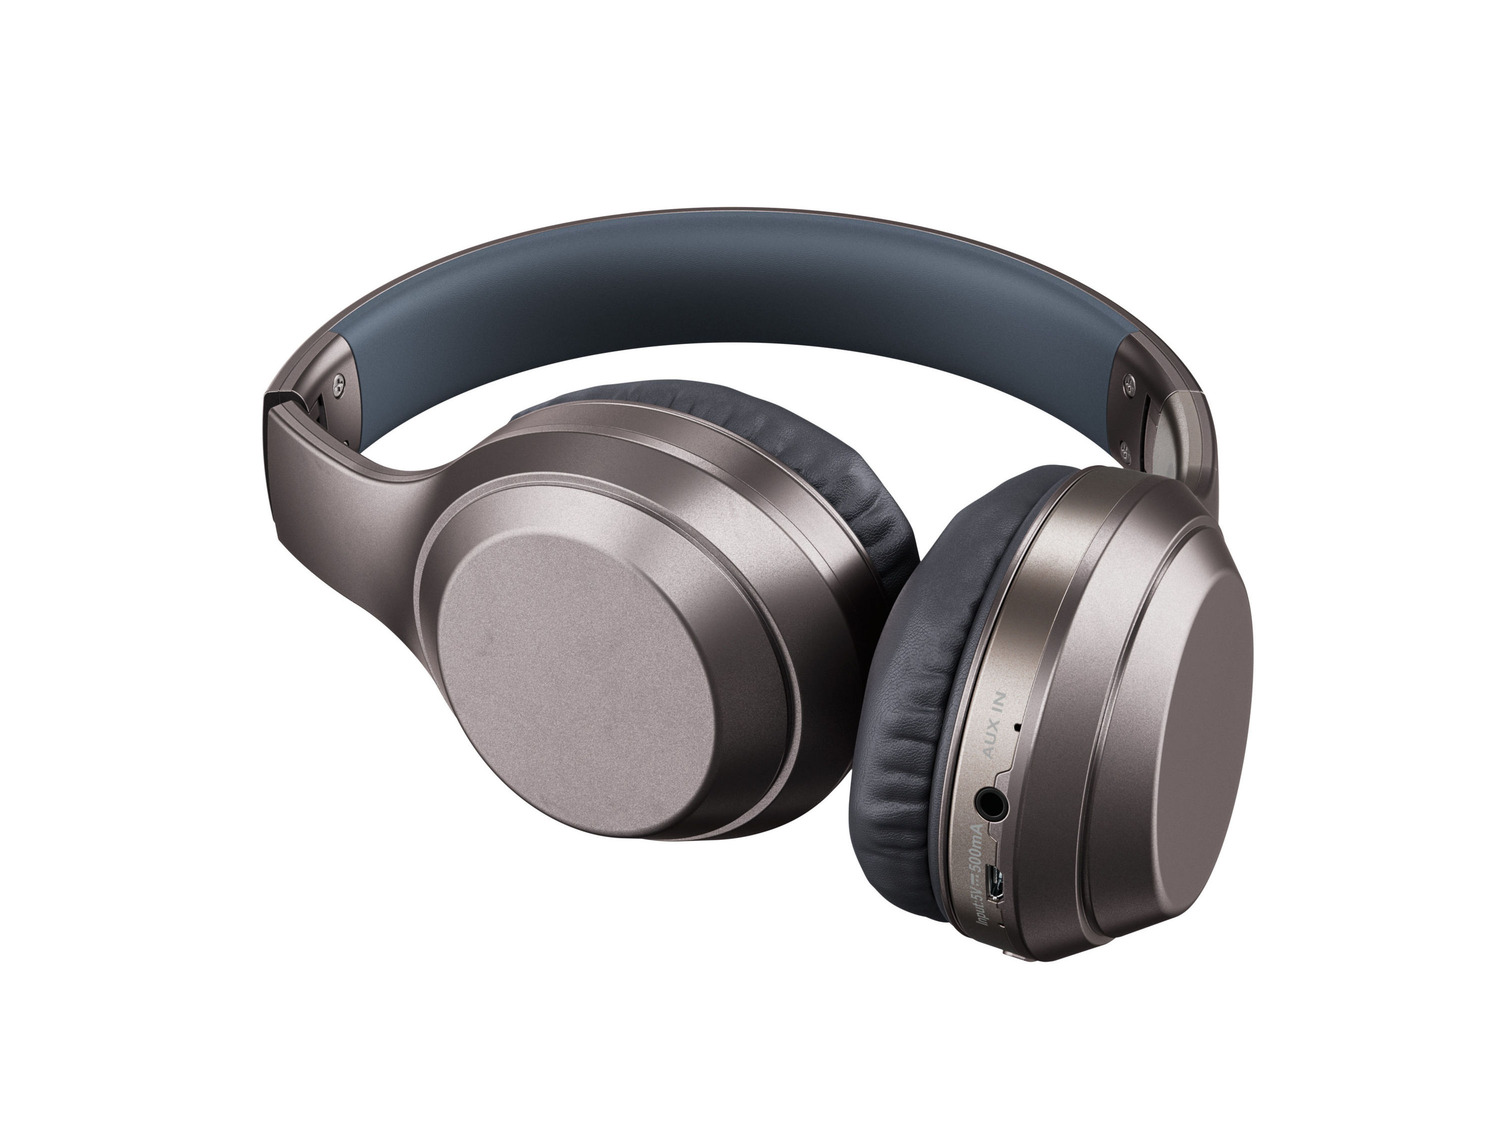 Kaufen Ear SILVERCREST® Deals Mesjeuxipad Bluetooth Kopfhörer On | Black Friday ZR7068